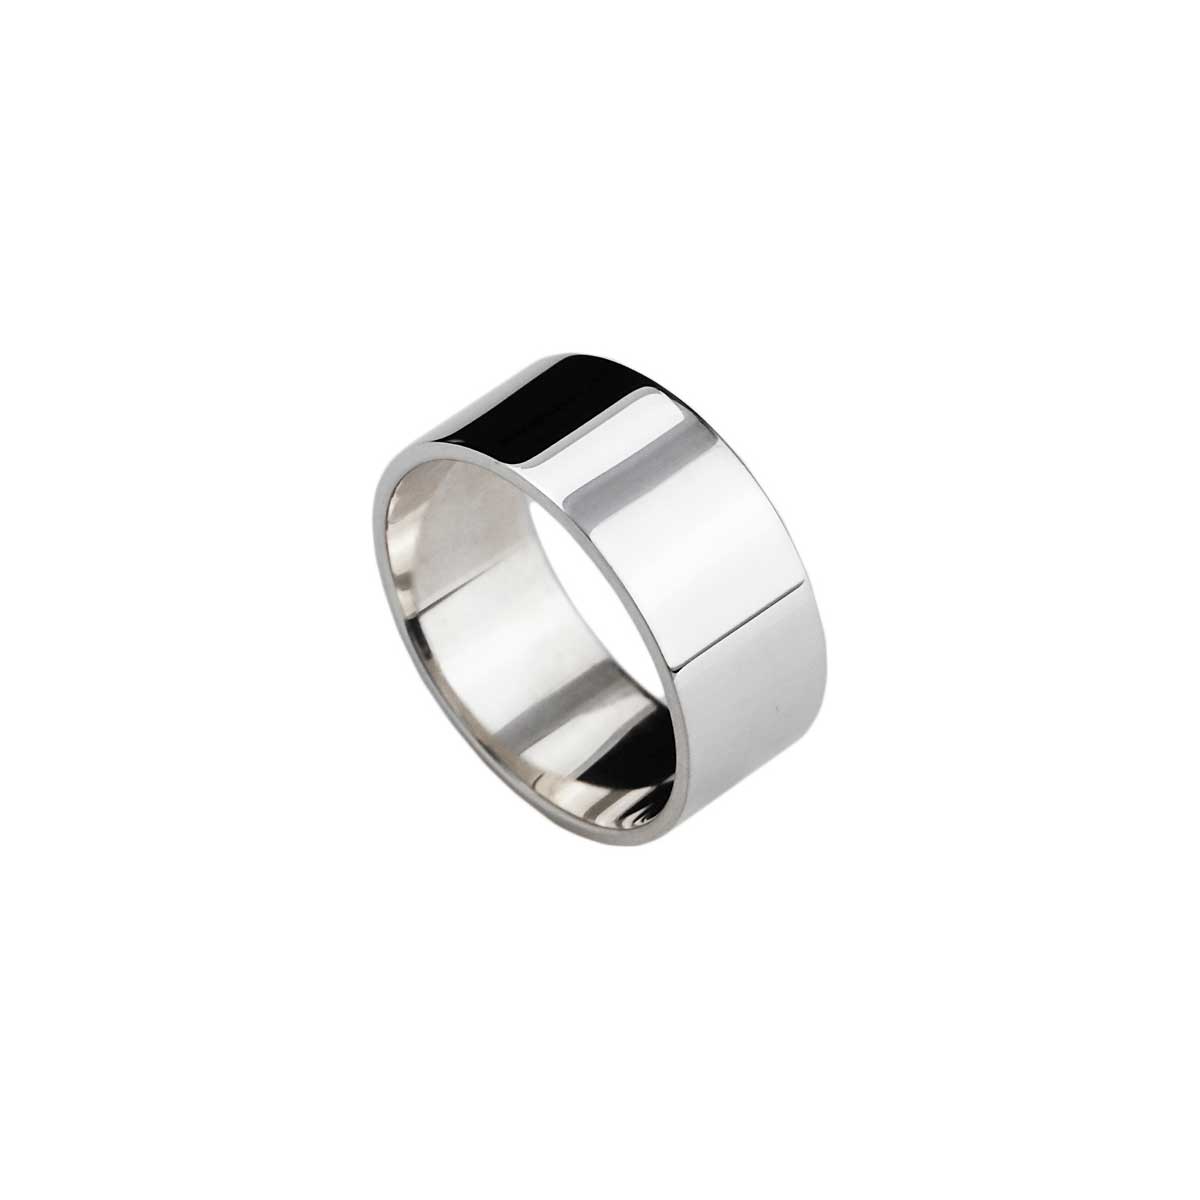 Buy Thrillz Stylish Silver Ring For Men Poker Design Stainless Steel  Adjustable Silver Ring For Men Boys Girls at Amazon.in